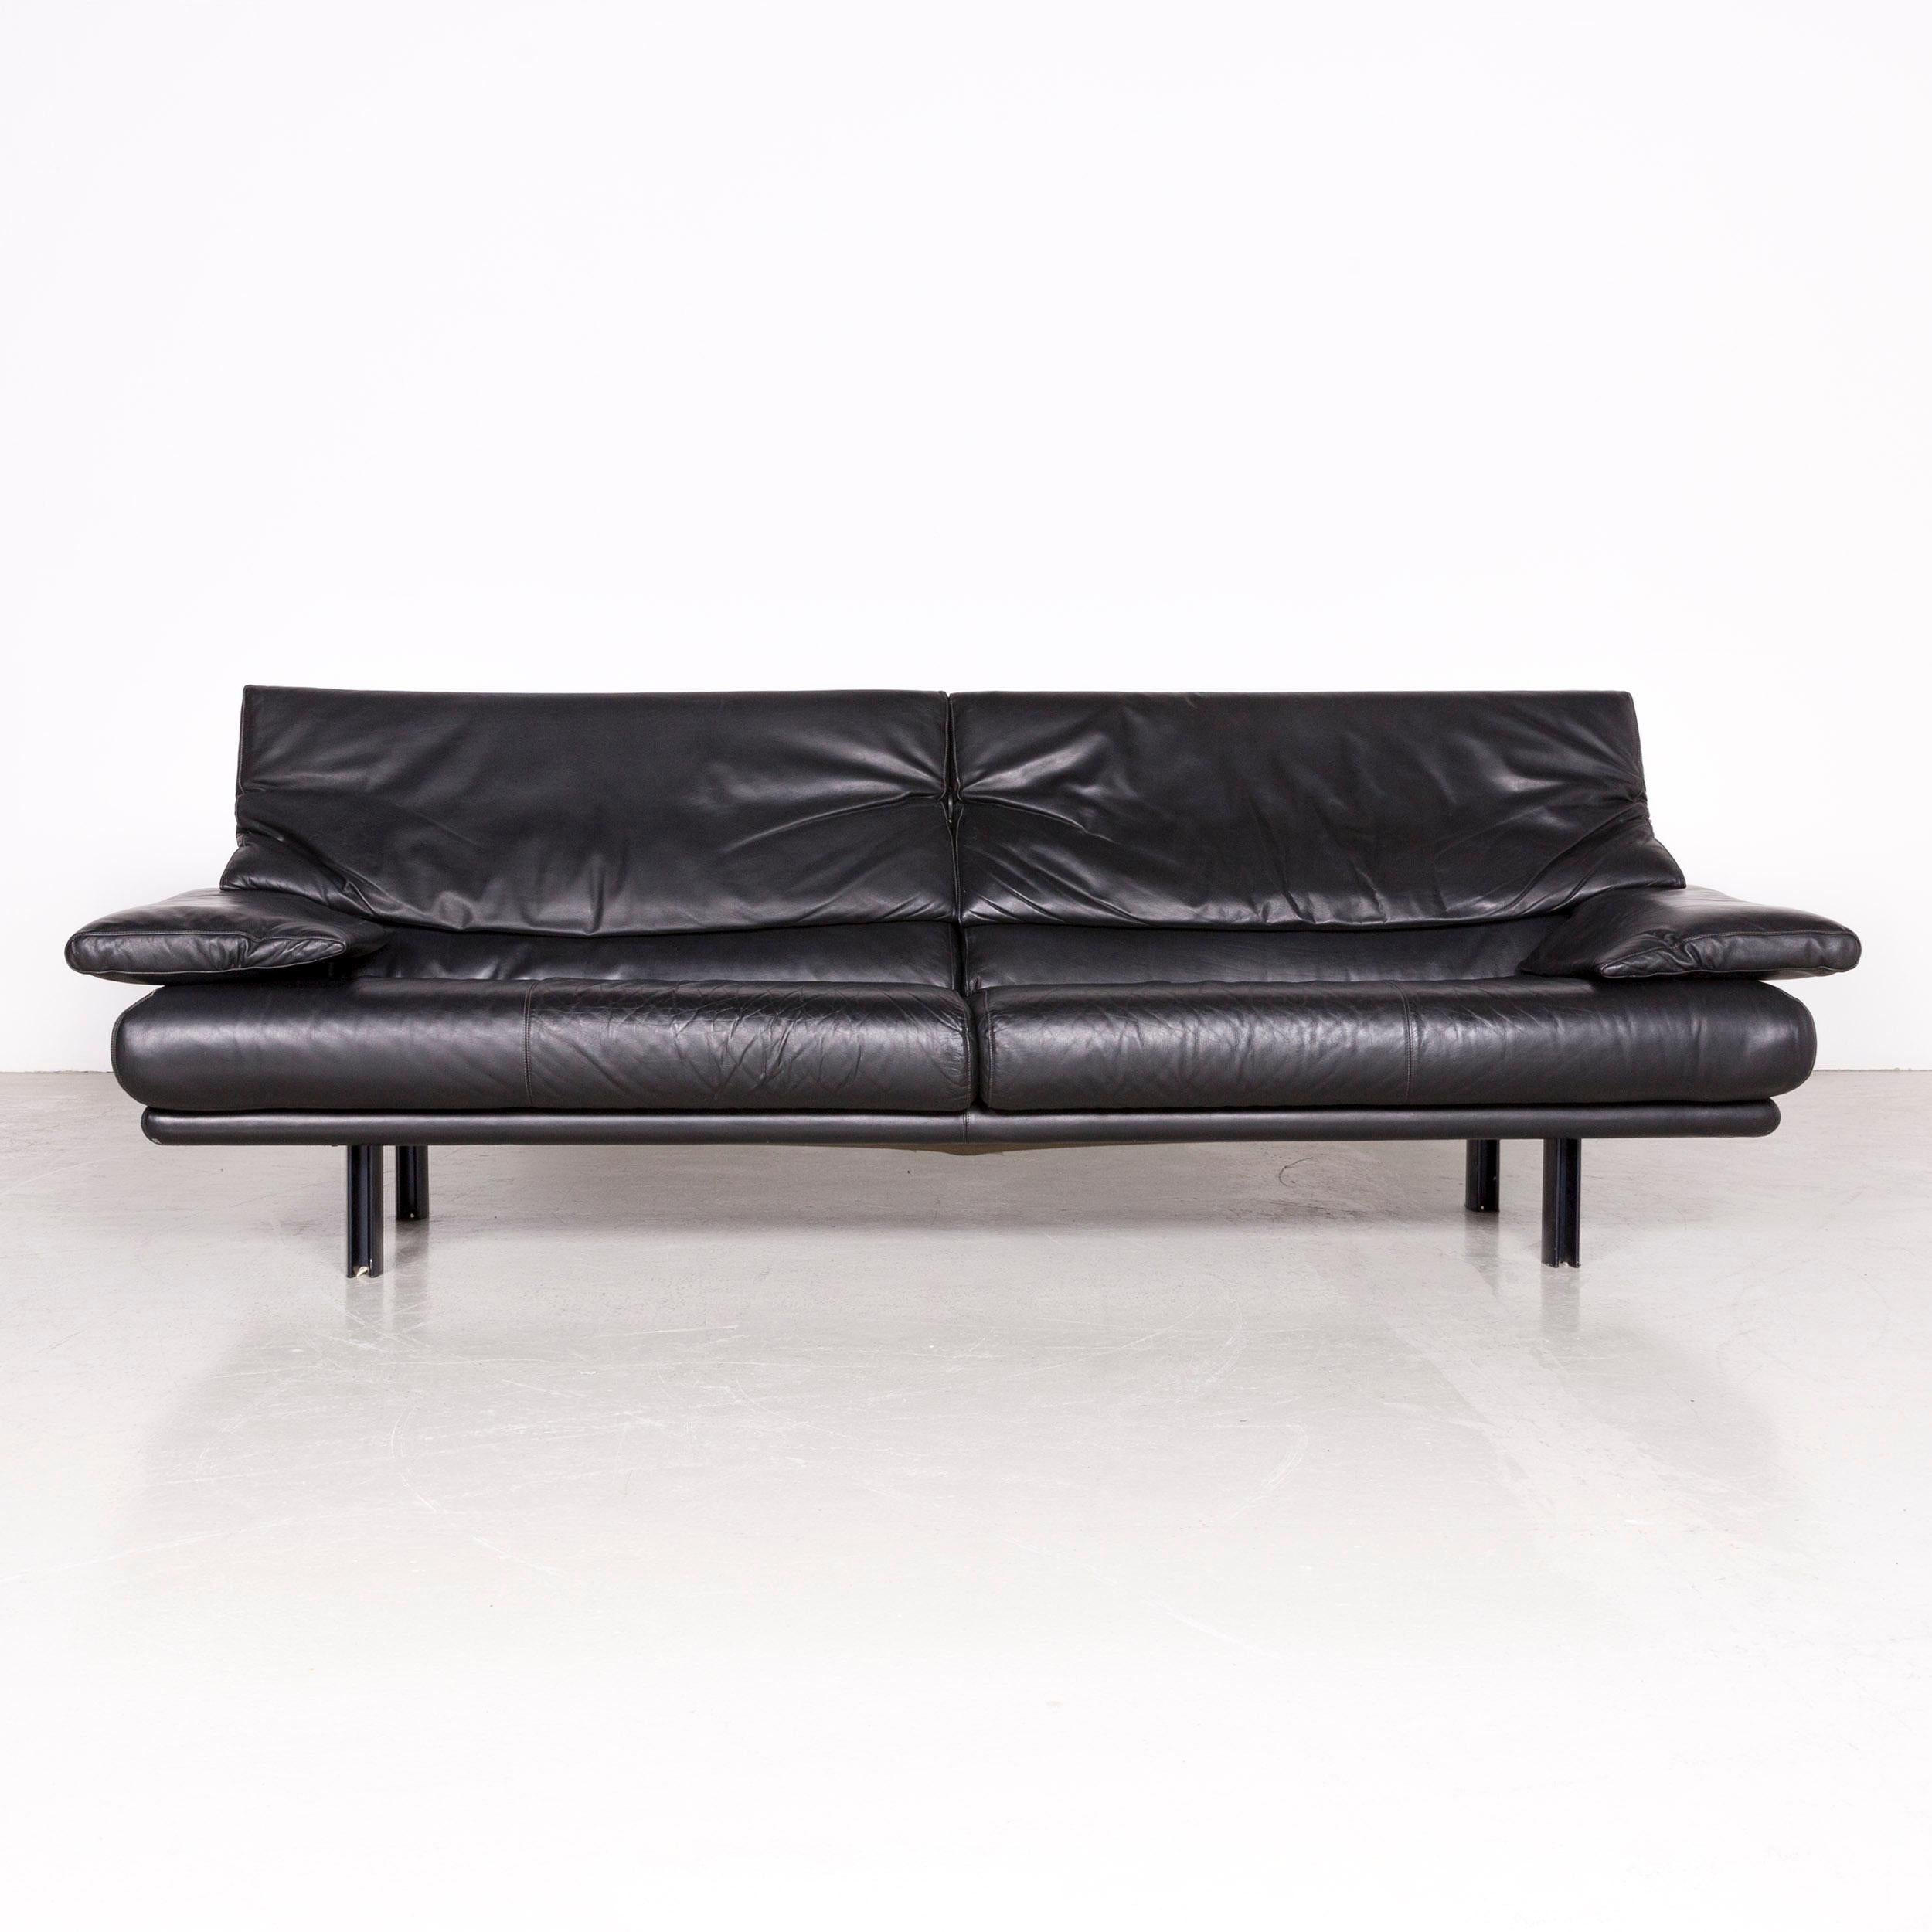 B&B Italia Alanda designer leather sofa set black three-seat couch relax.